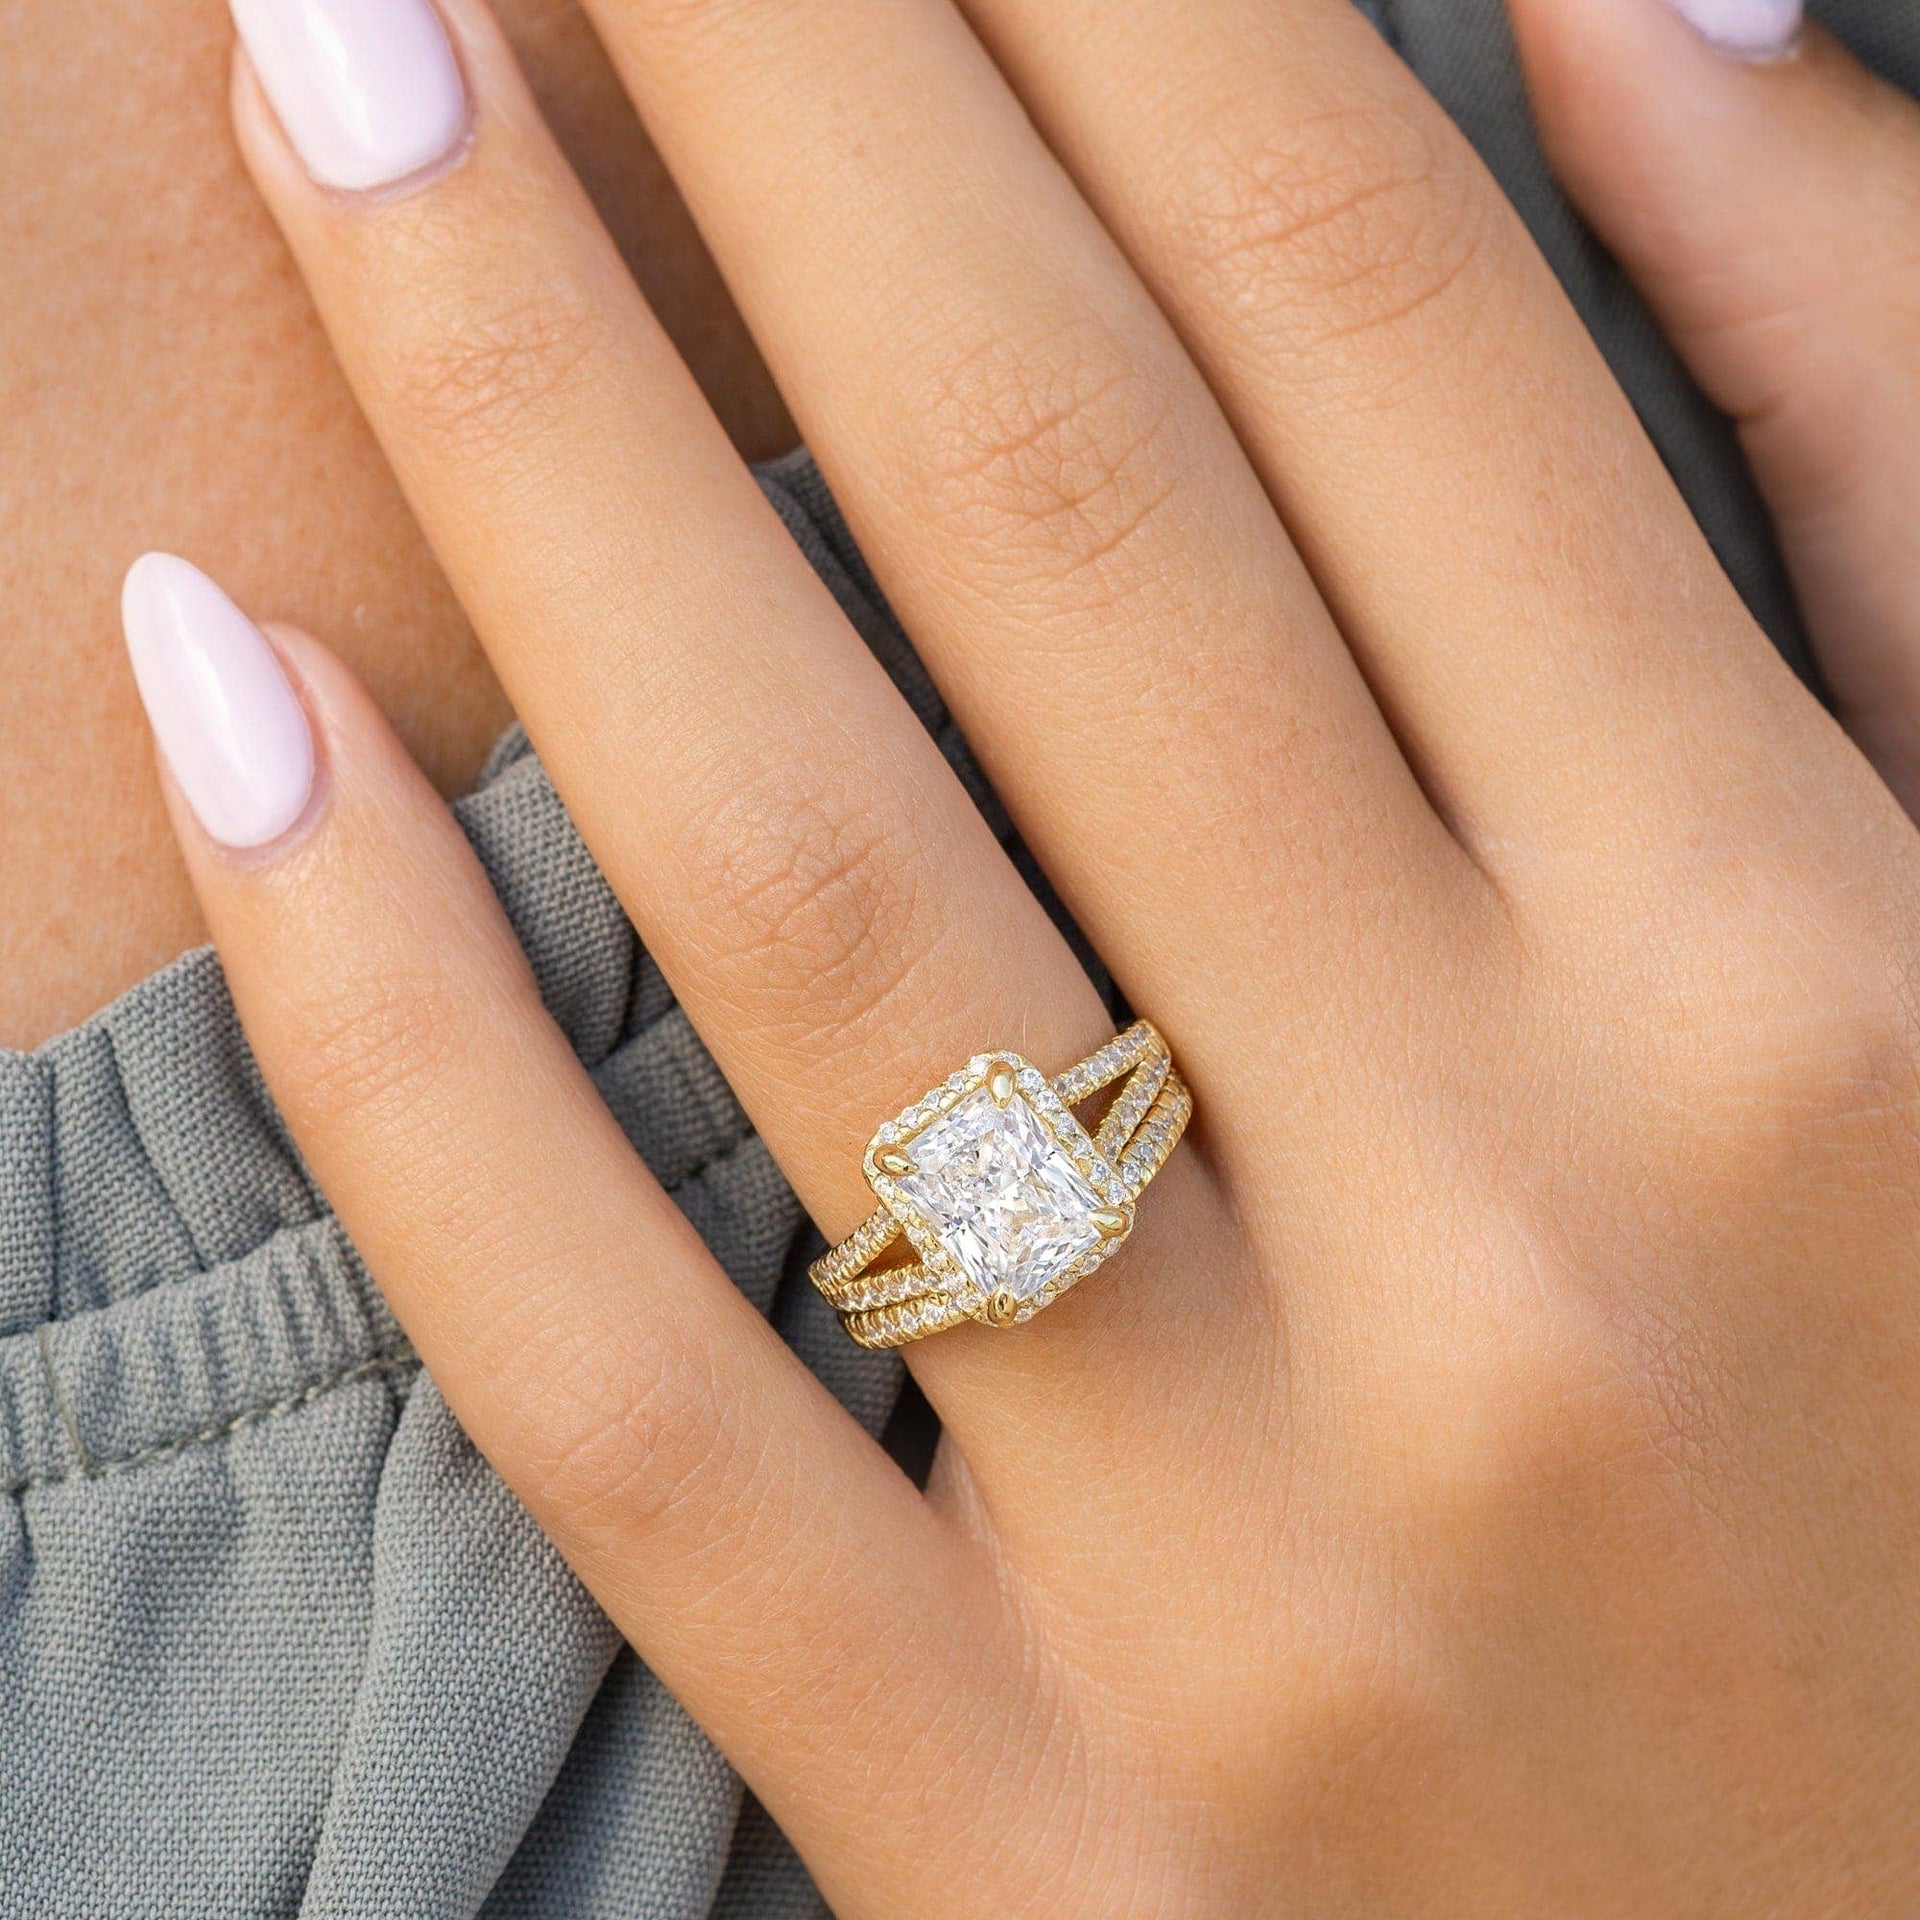 elegant gold 3.5 carat radiant cut wedding ring set on female hand